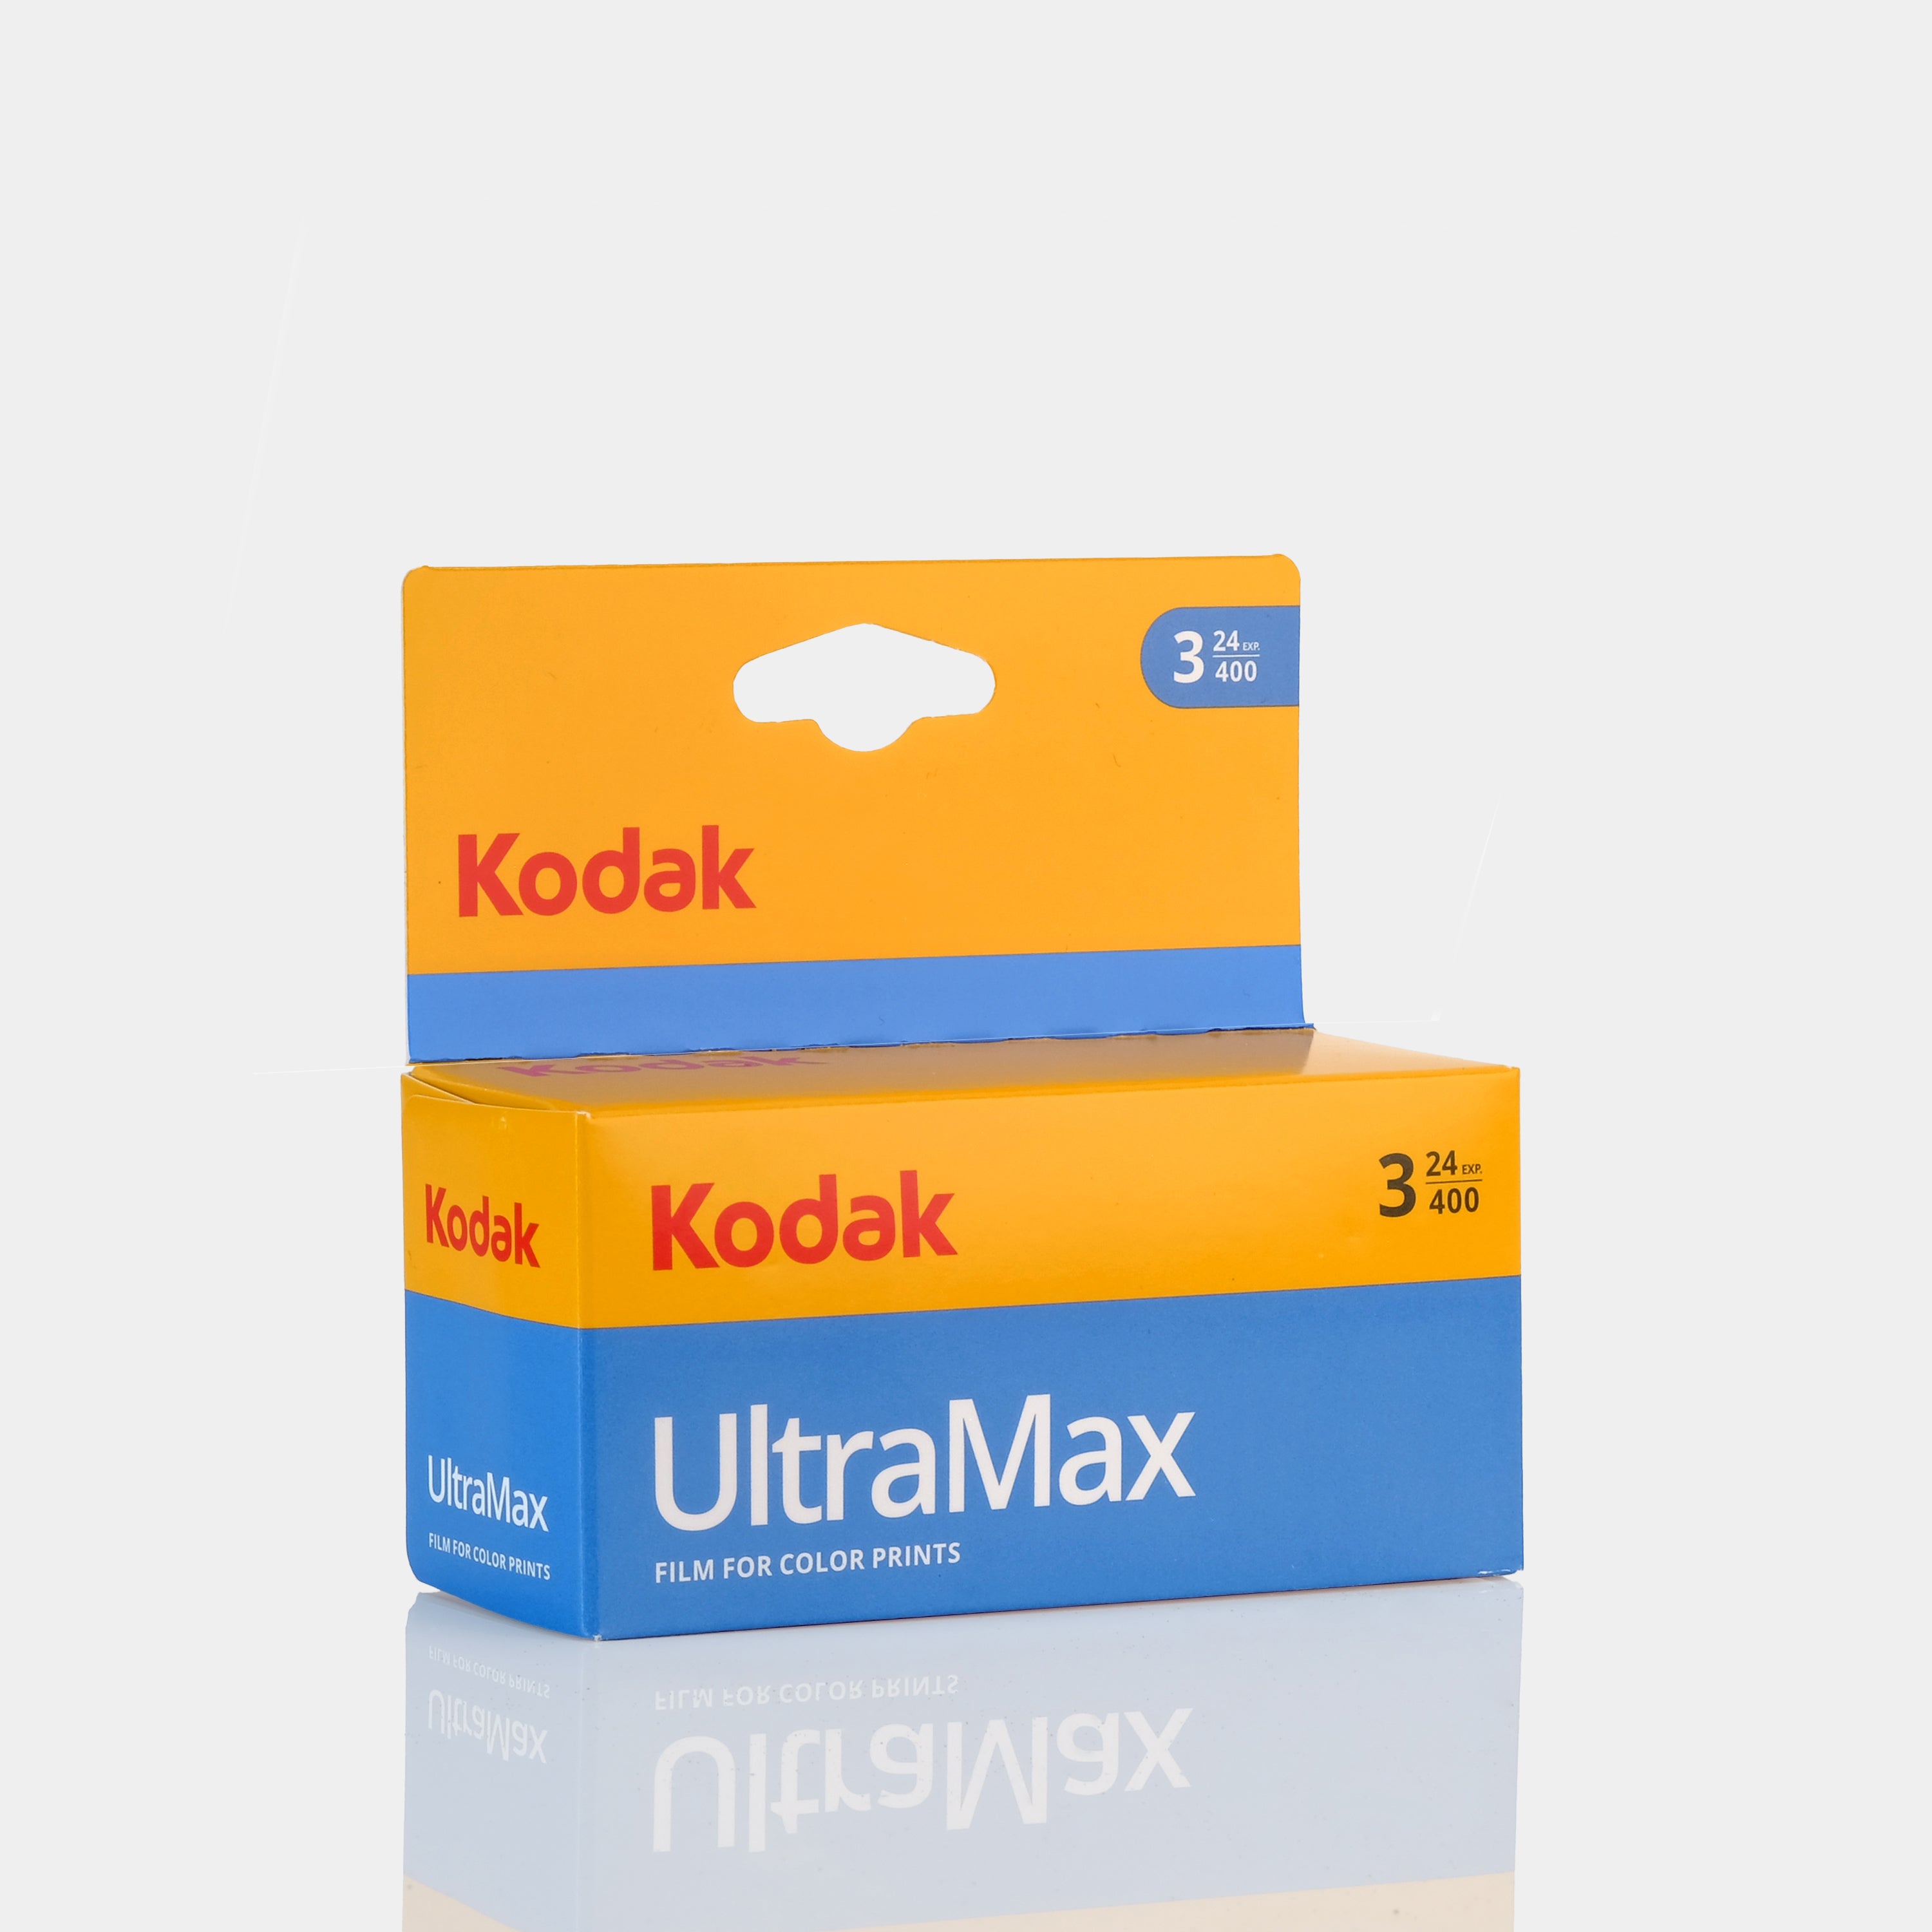 Kodak M35 Reusable 35mm Point and Shoot Yellow Compact Film Camera With 3-Pack Kodak UltraMax Film